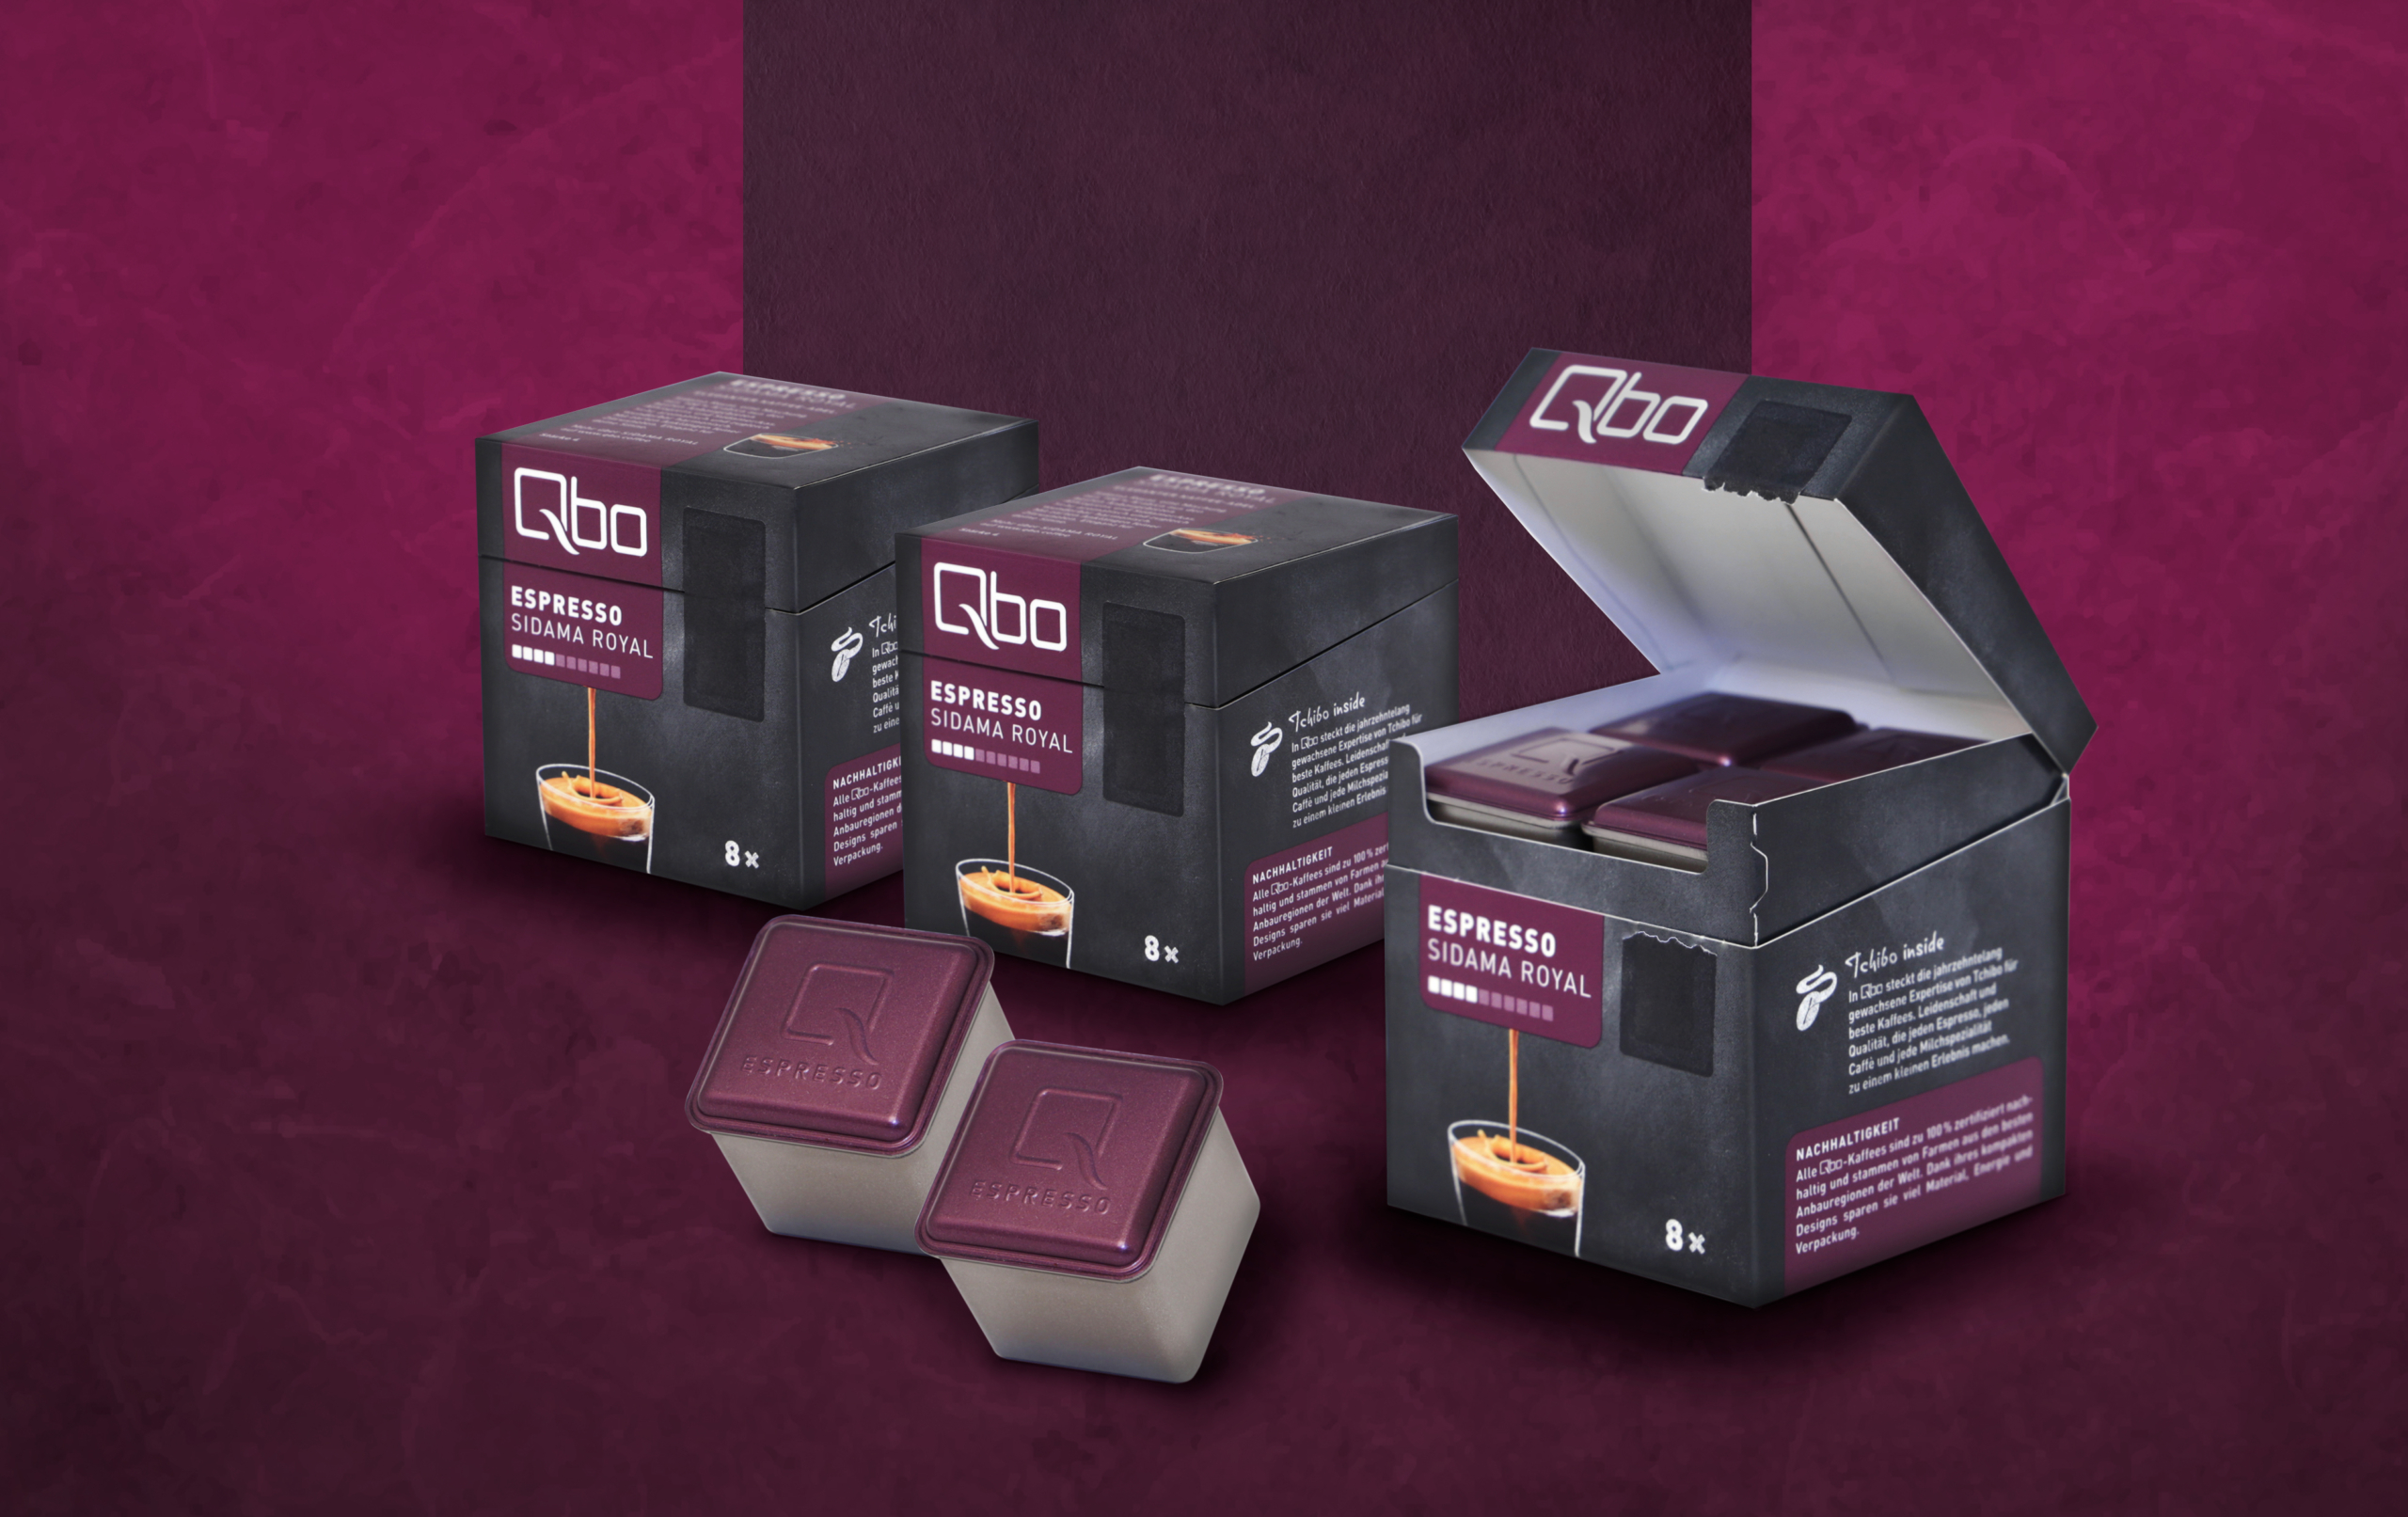 Tchibo Qbo Packaging Redesign und Development Visual